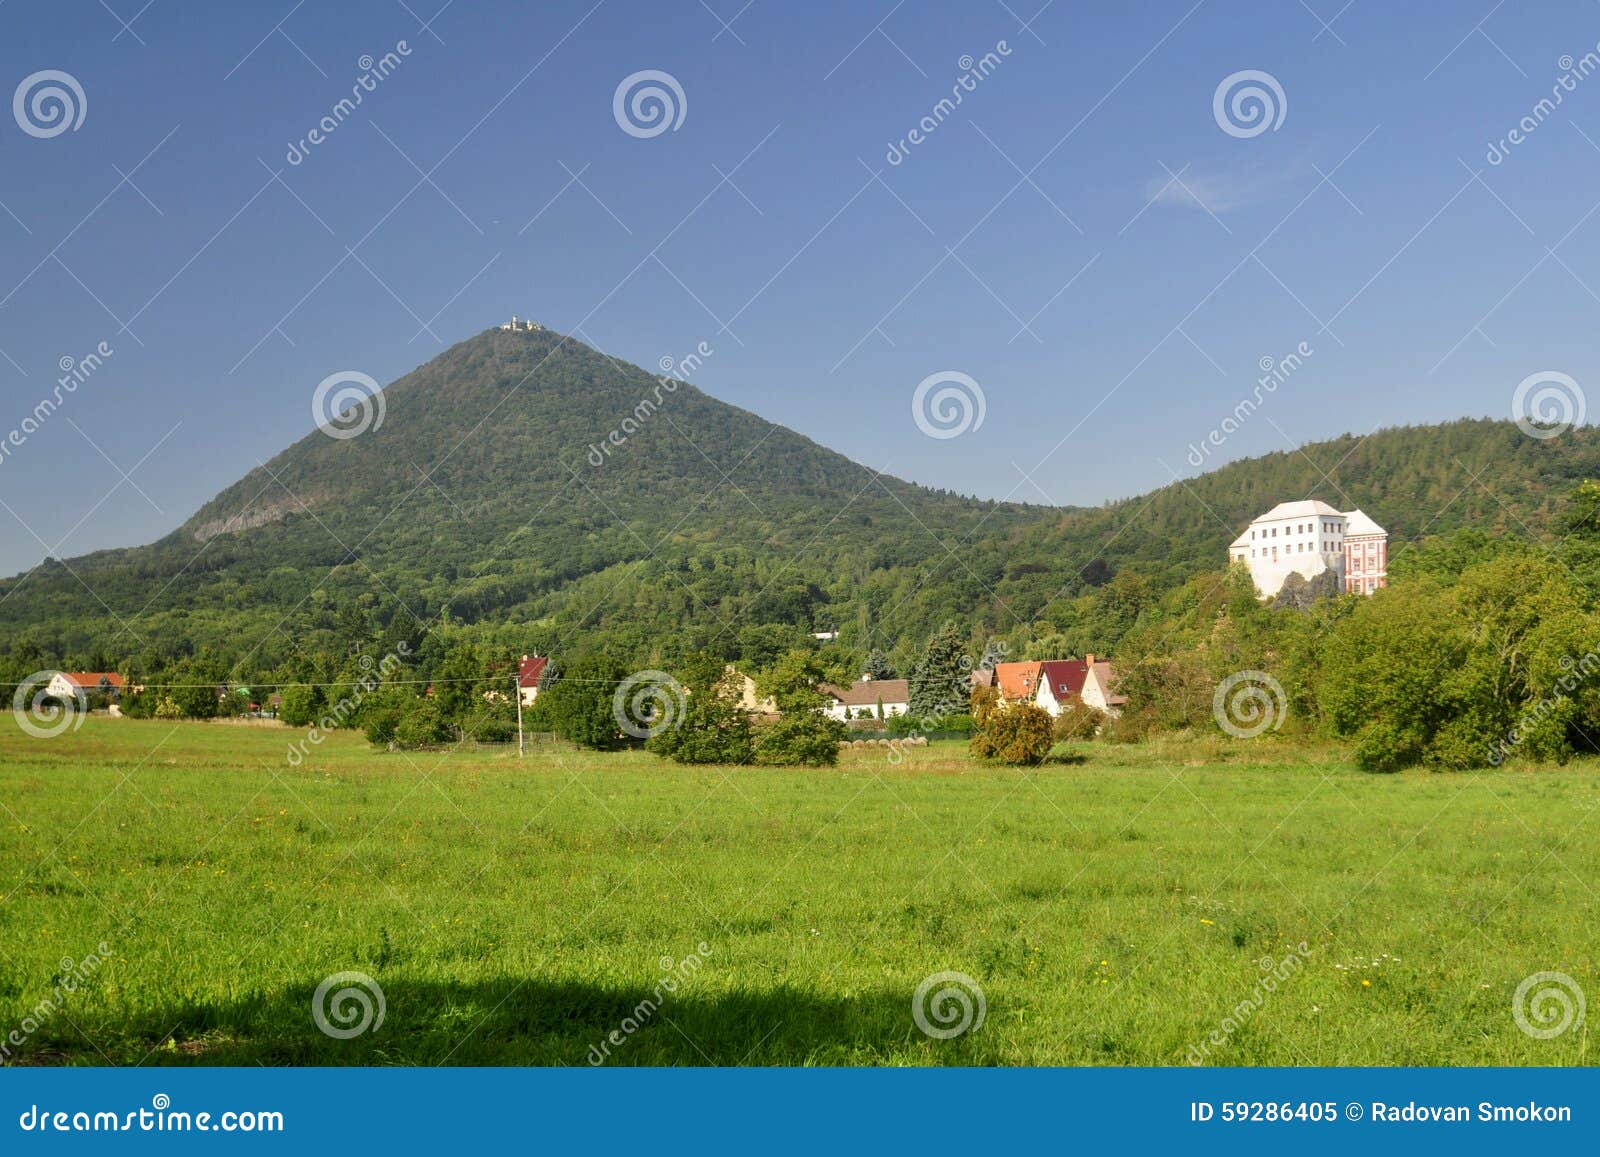 landscape bohemia central hills